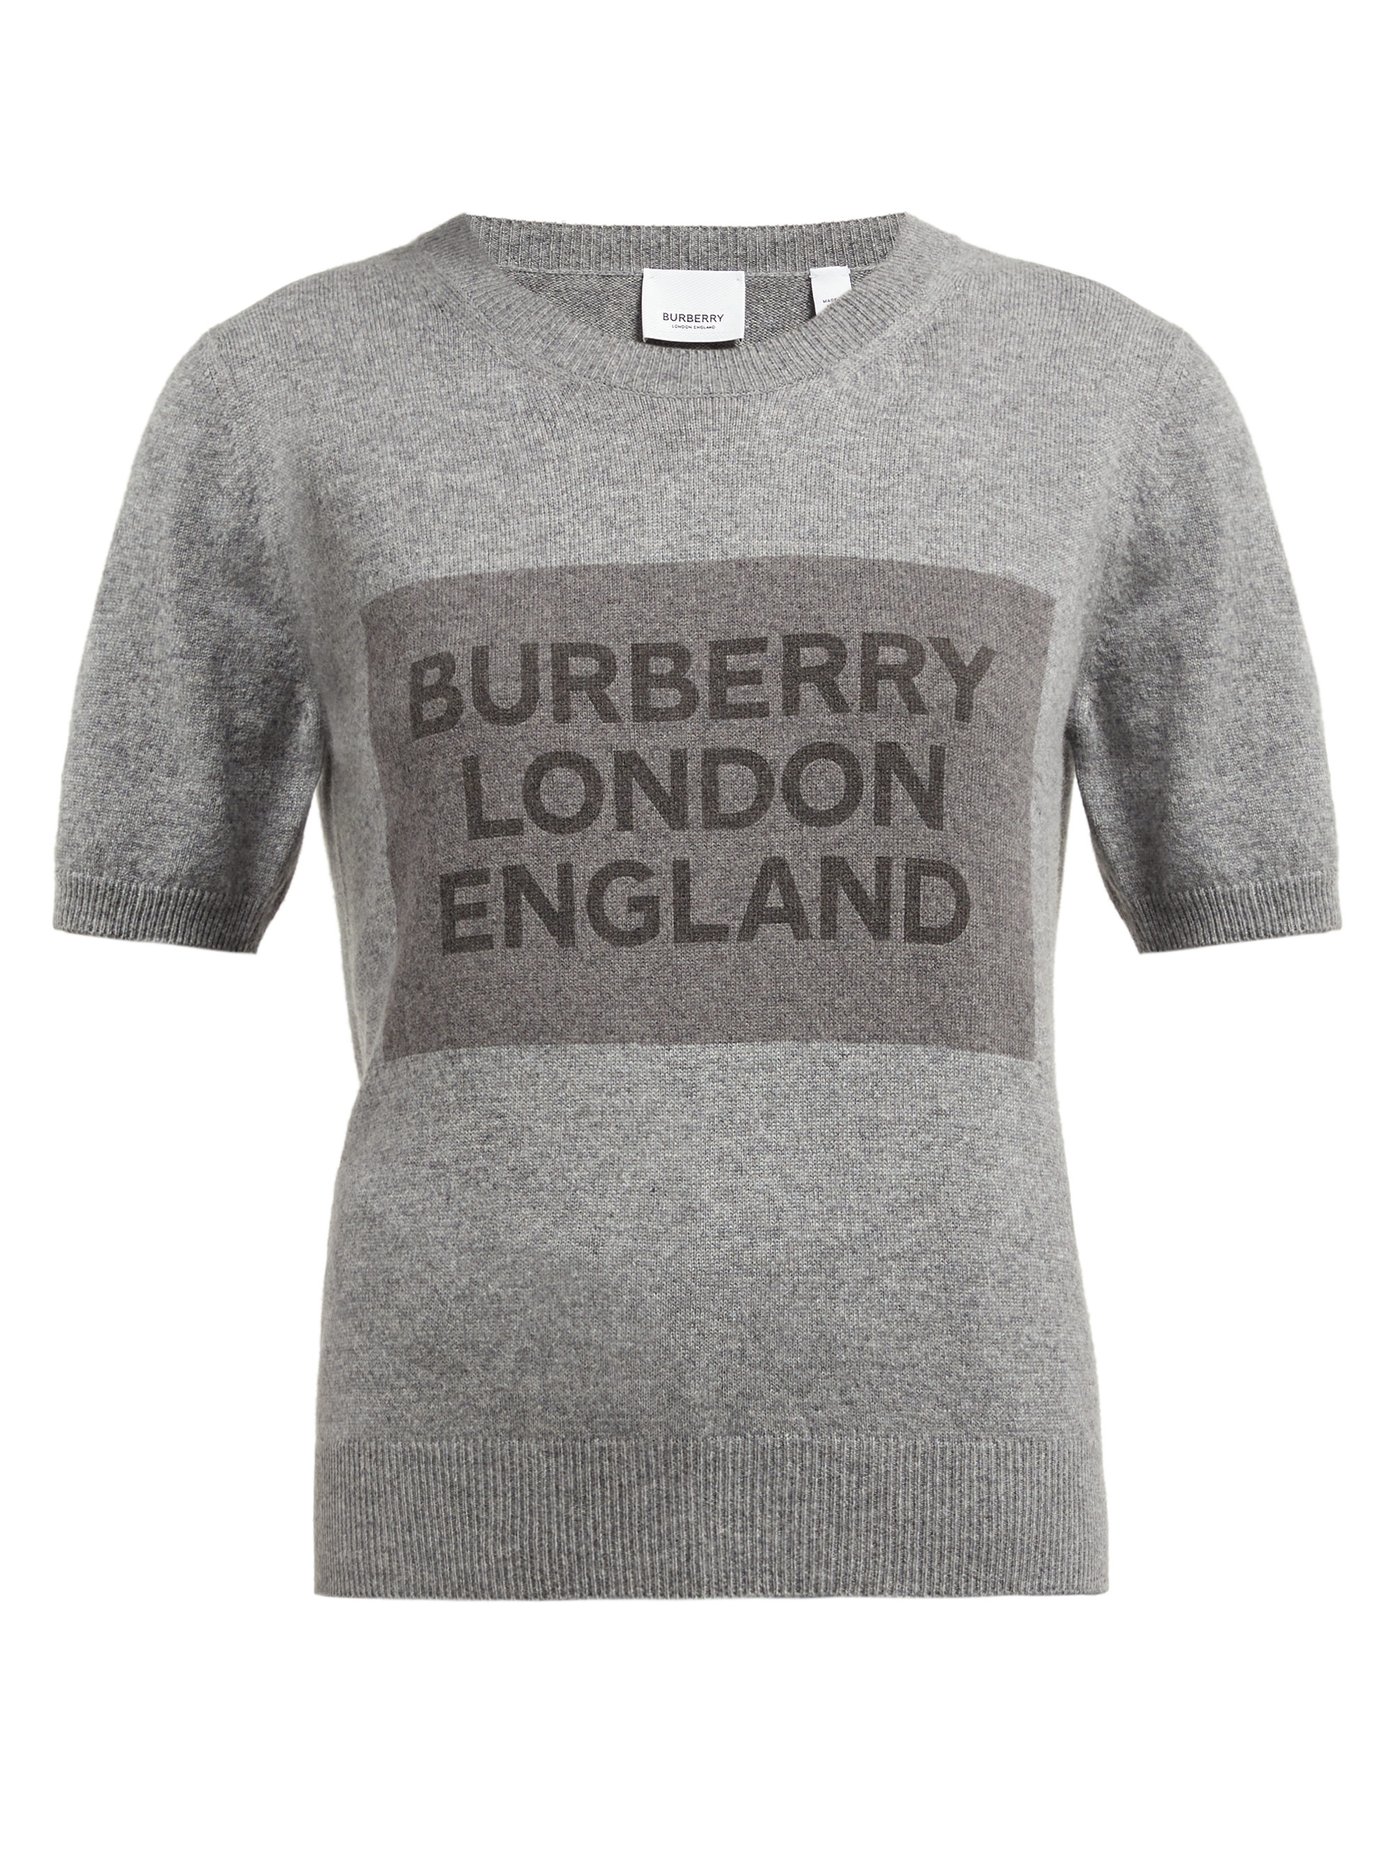 burberry t shirt uk